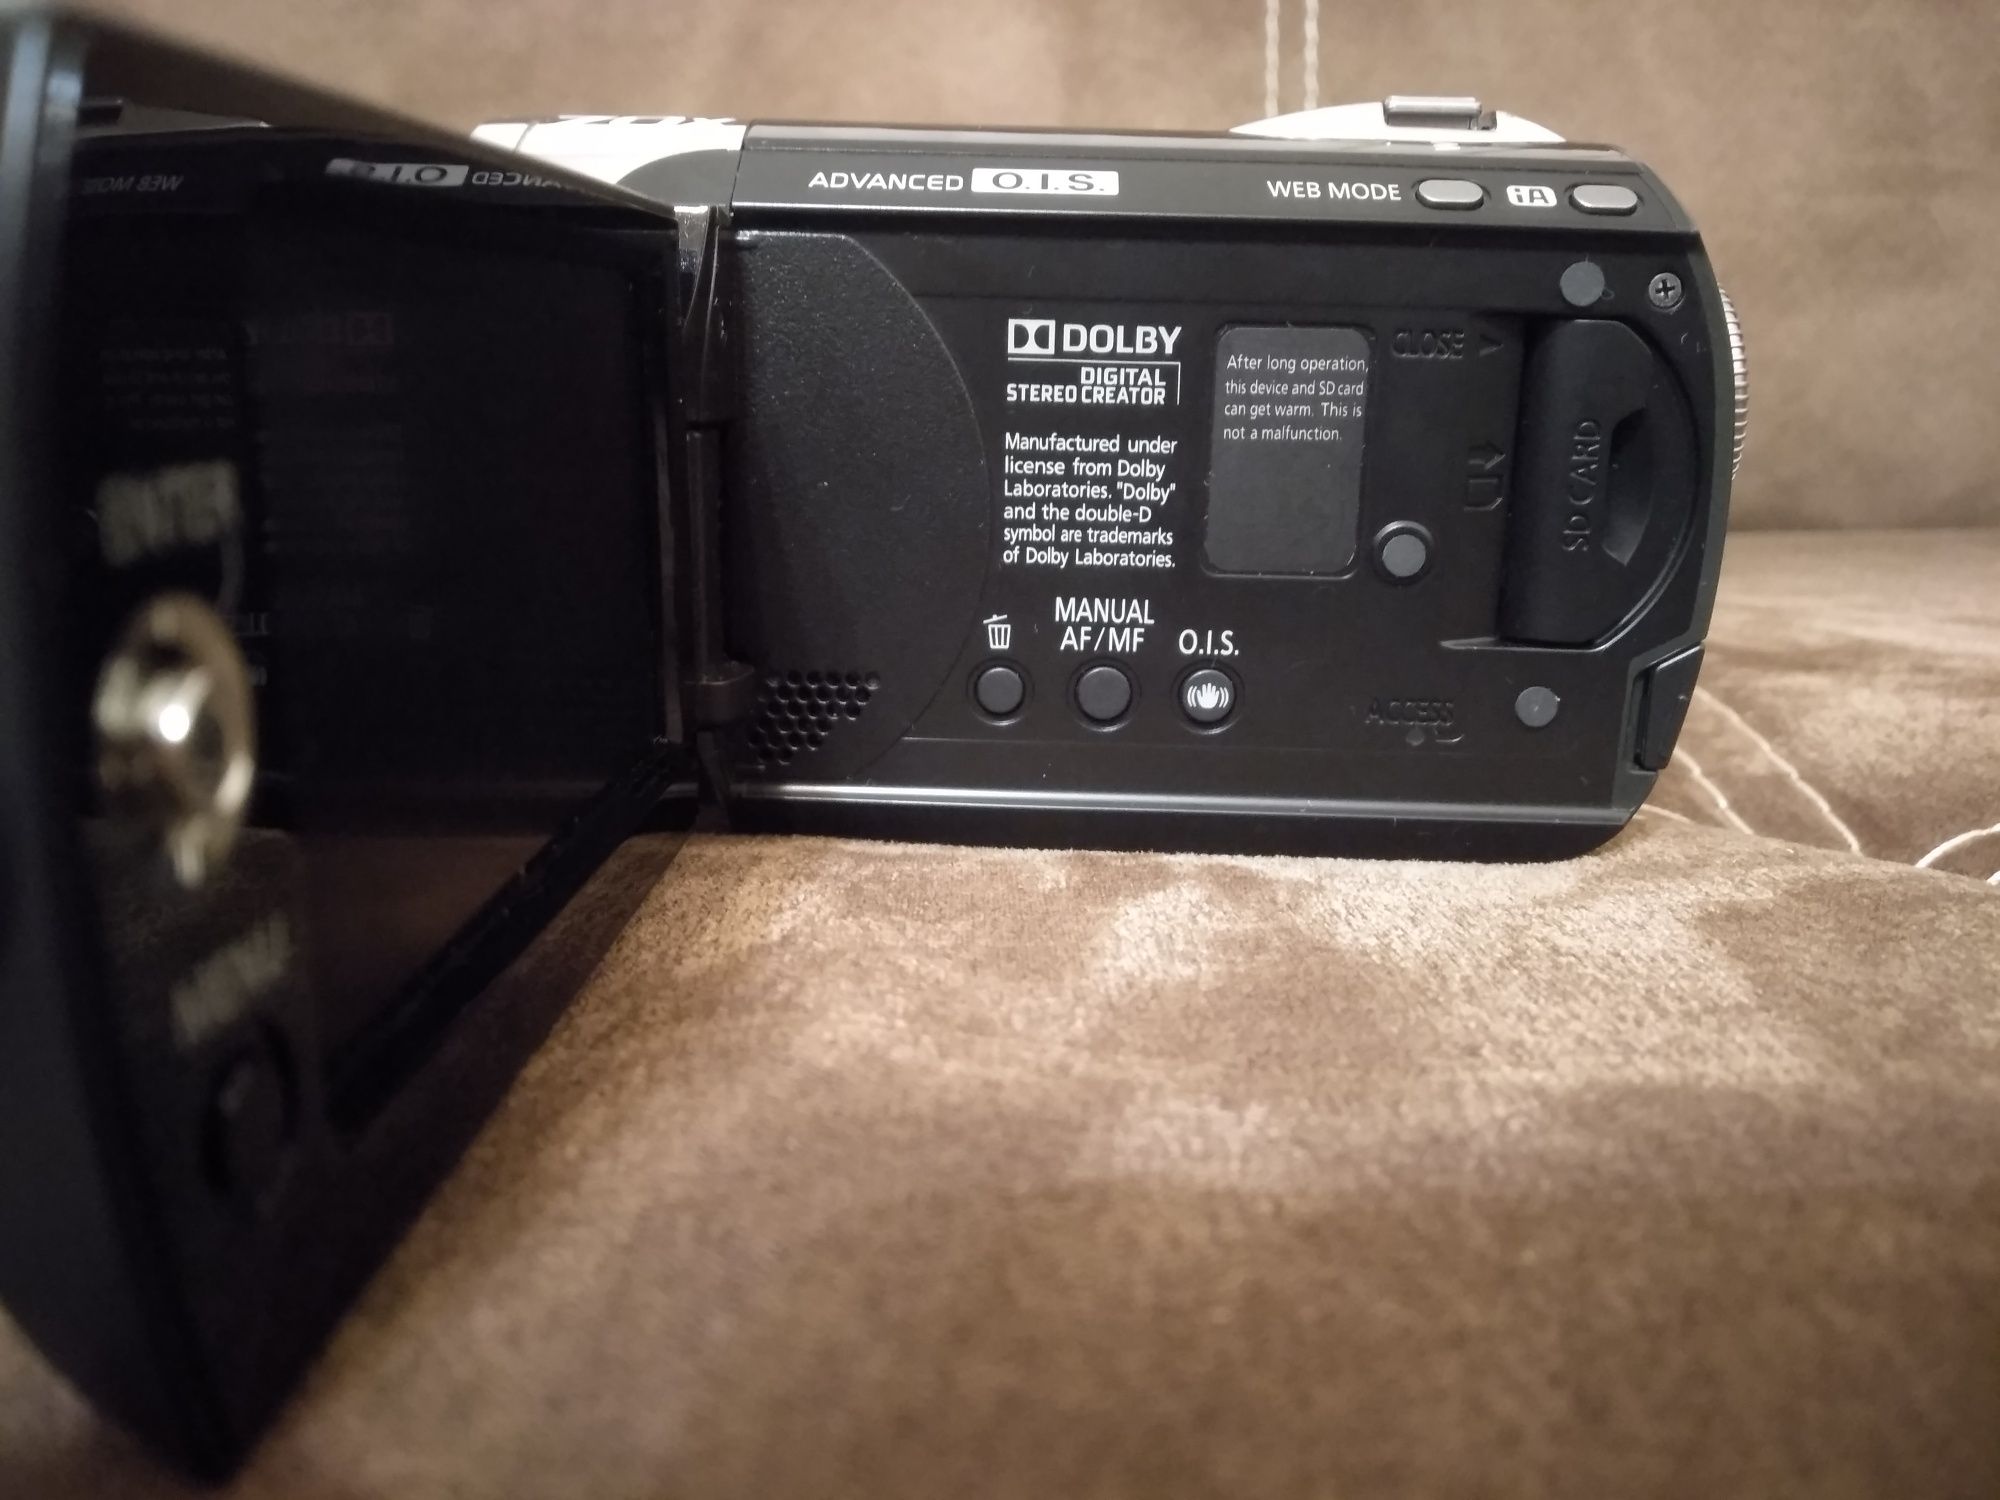 Видеокамера Panasonic SDR S26 + чанта